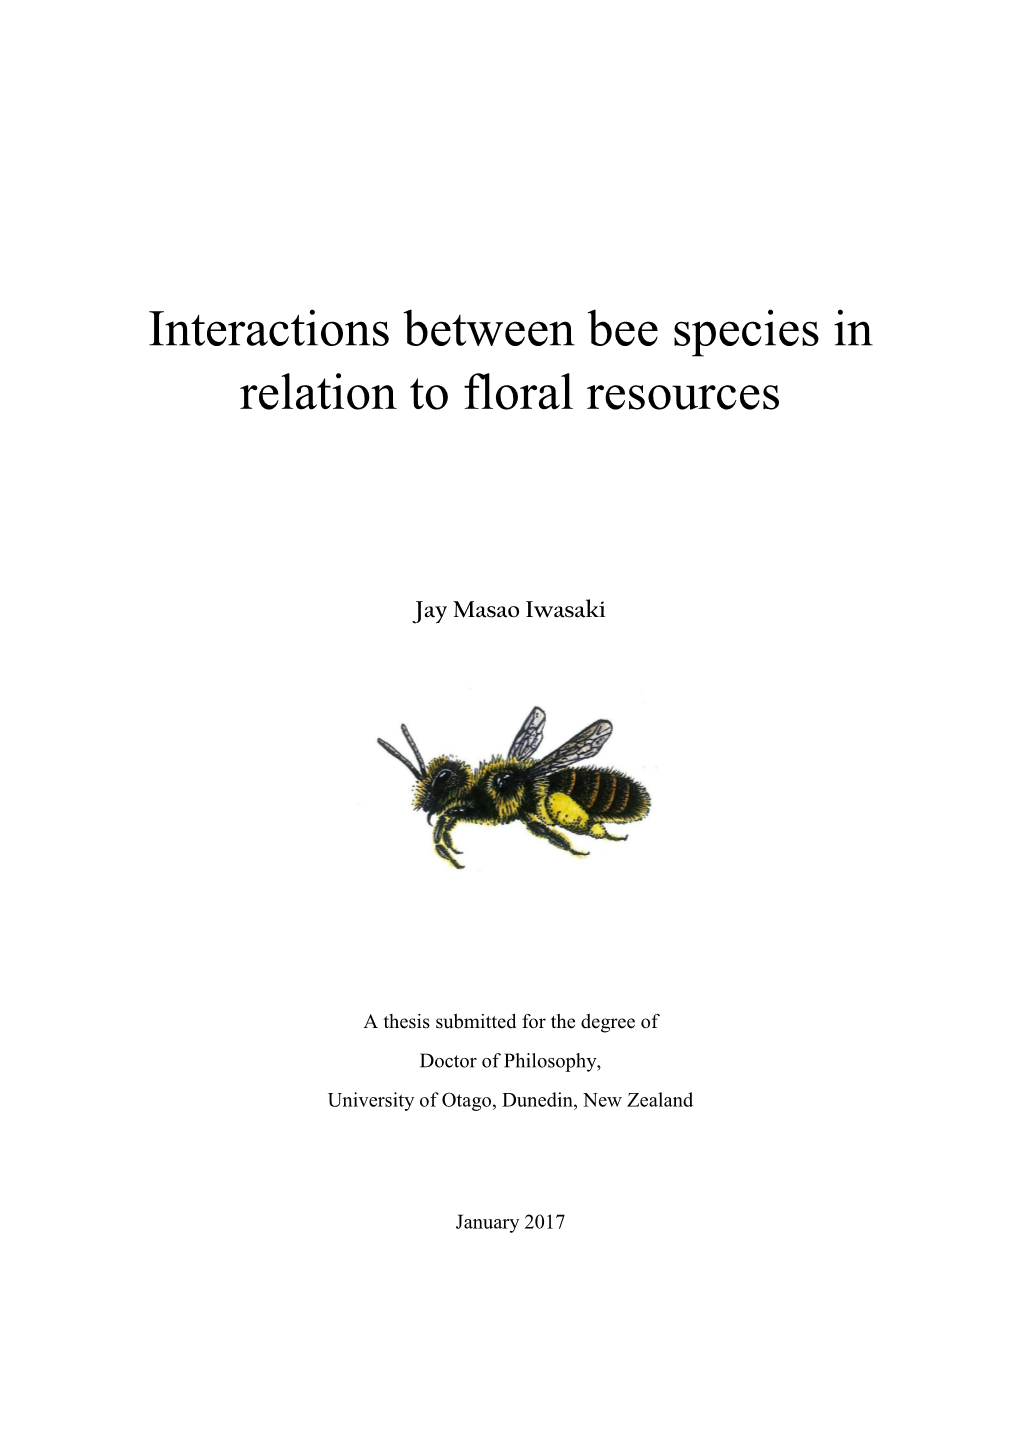 Interactions Between Bee Species in Relation to Floral Resources